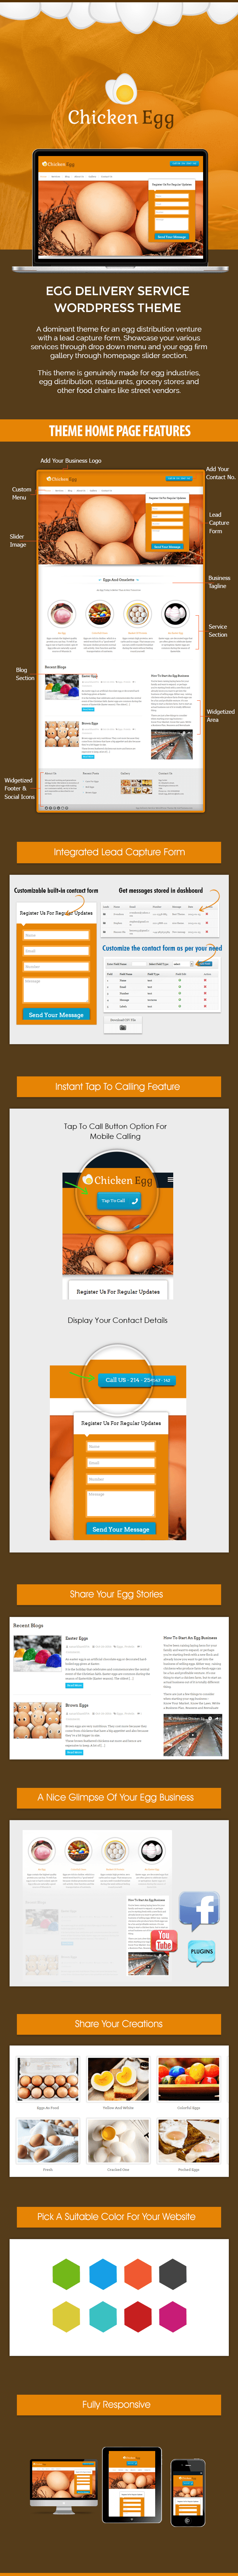 Egg Form Logo - ChickenEgg] Egg Delivery Service WordPress Theme | InkThemes